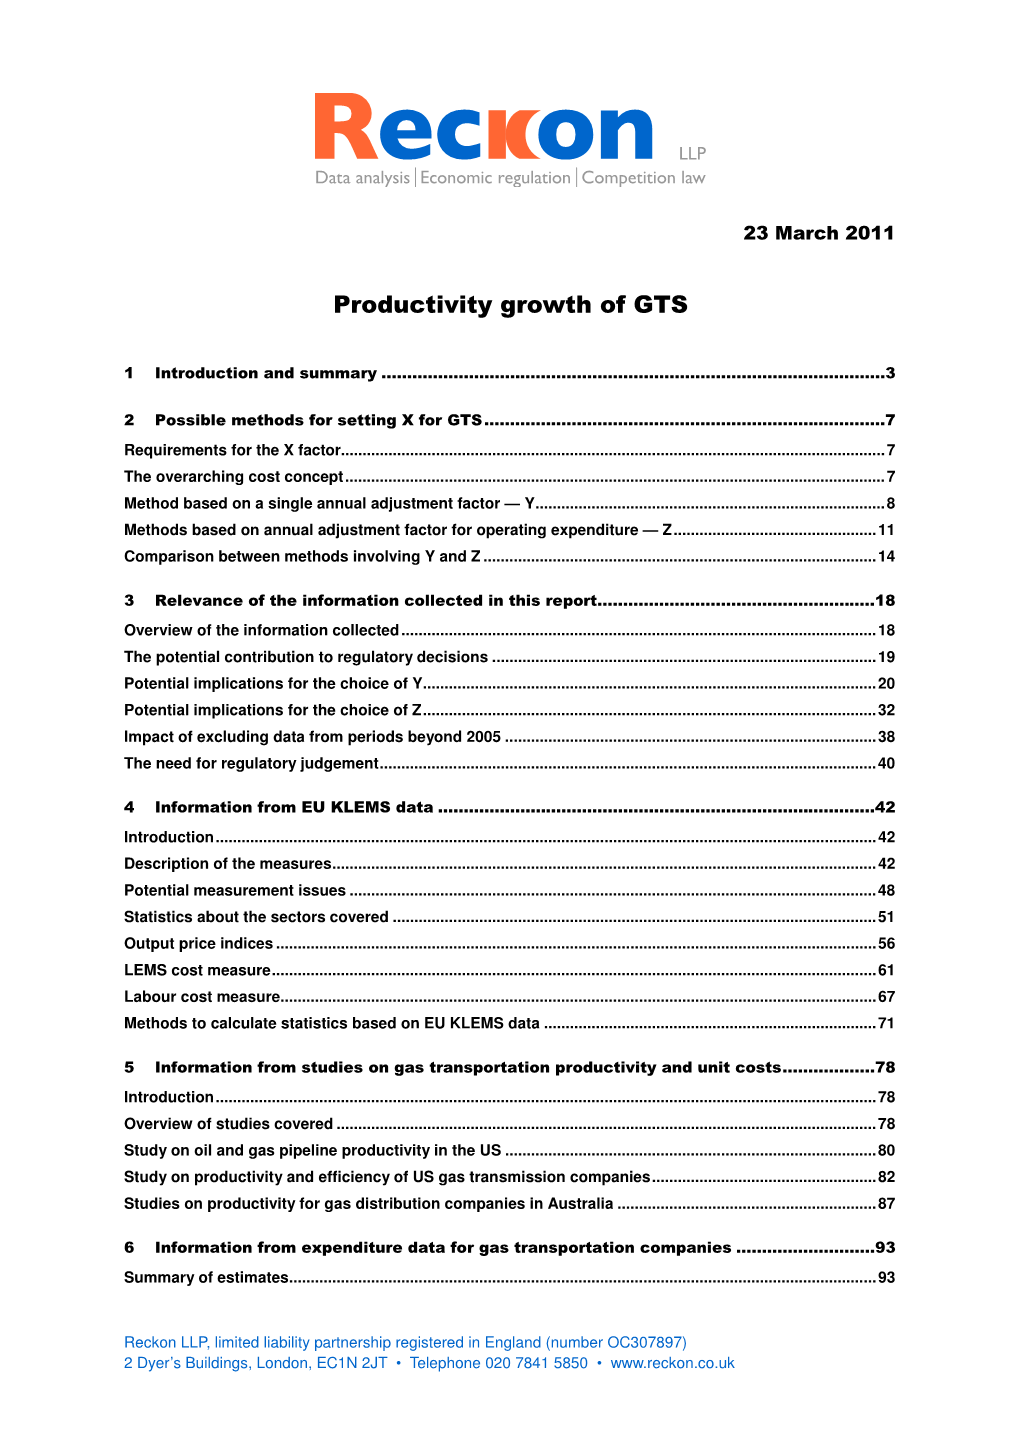 Productivity Growth of GTS